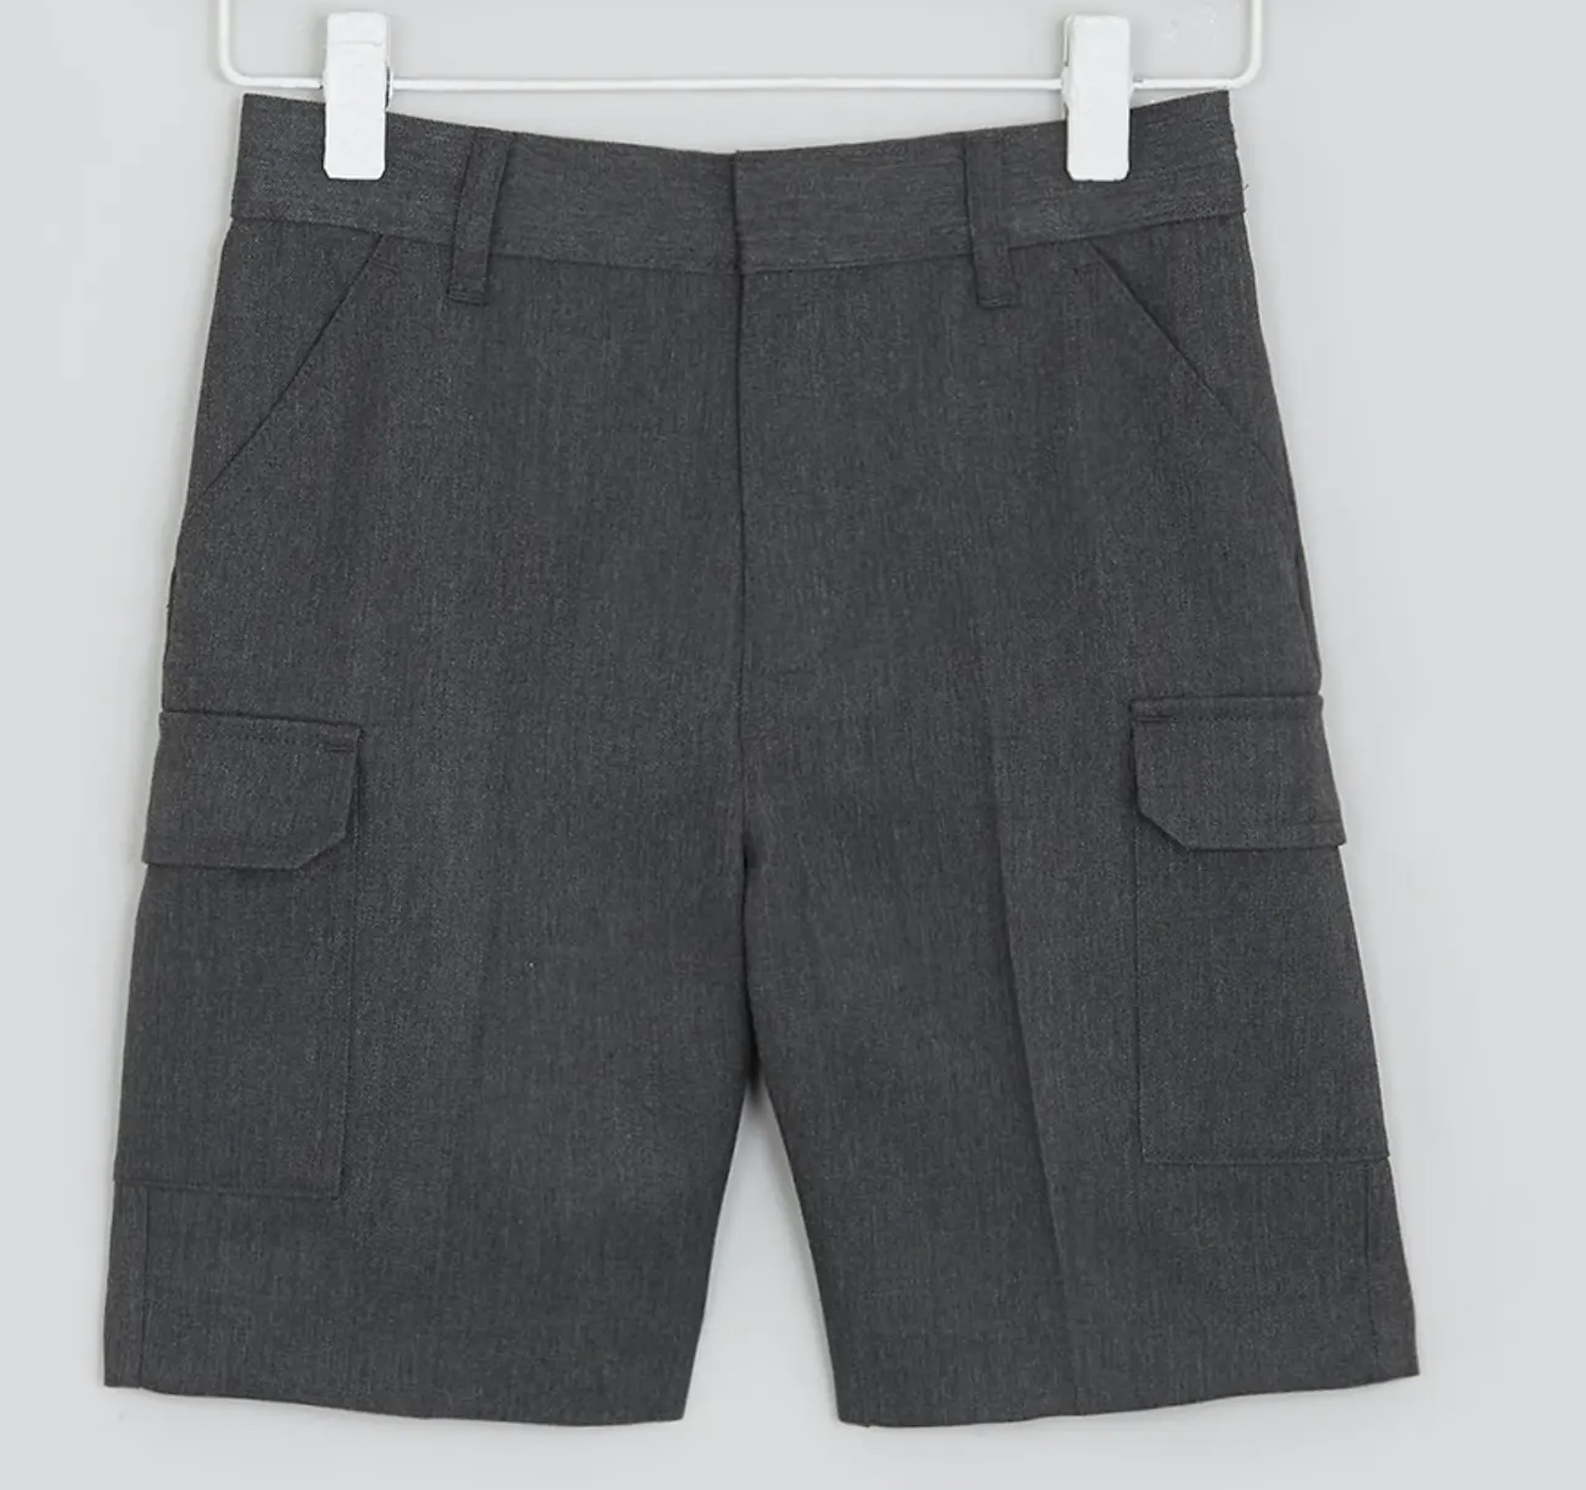 Boys' Dark Grey Cargo Shorts, Pull on, Flat Front, Adjustable Waist, Four Pockets 4-5 Y